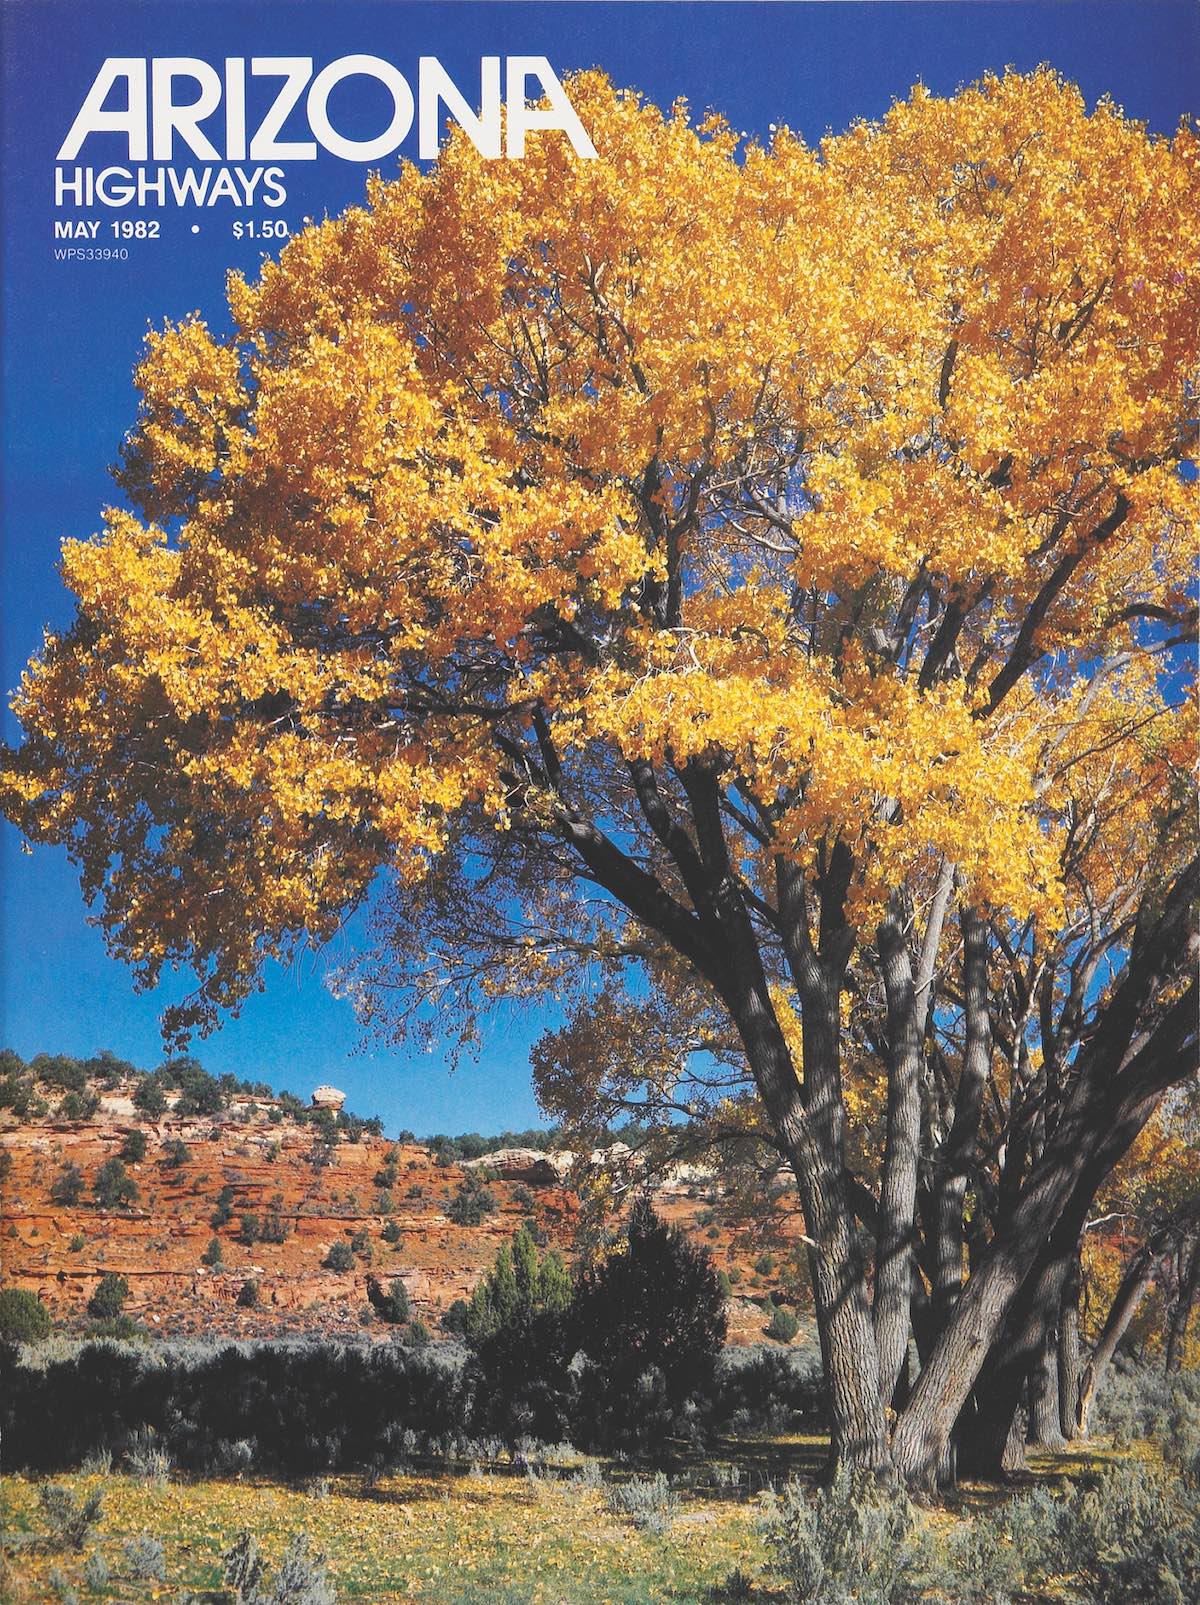 May 1982 cover of Arizona Highways